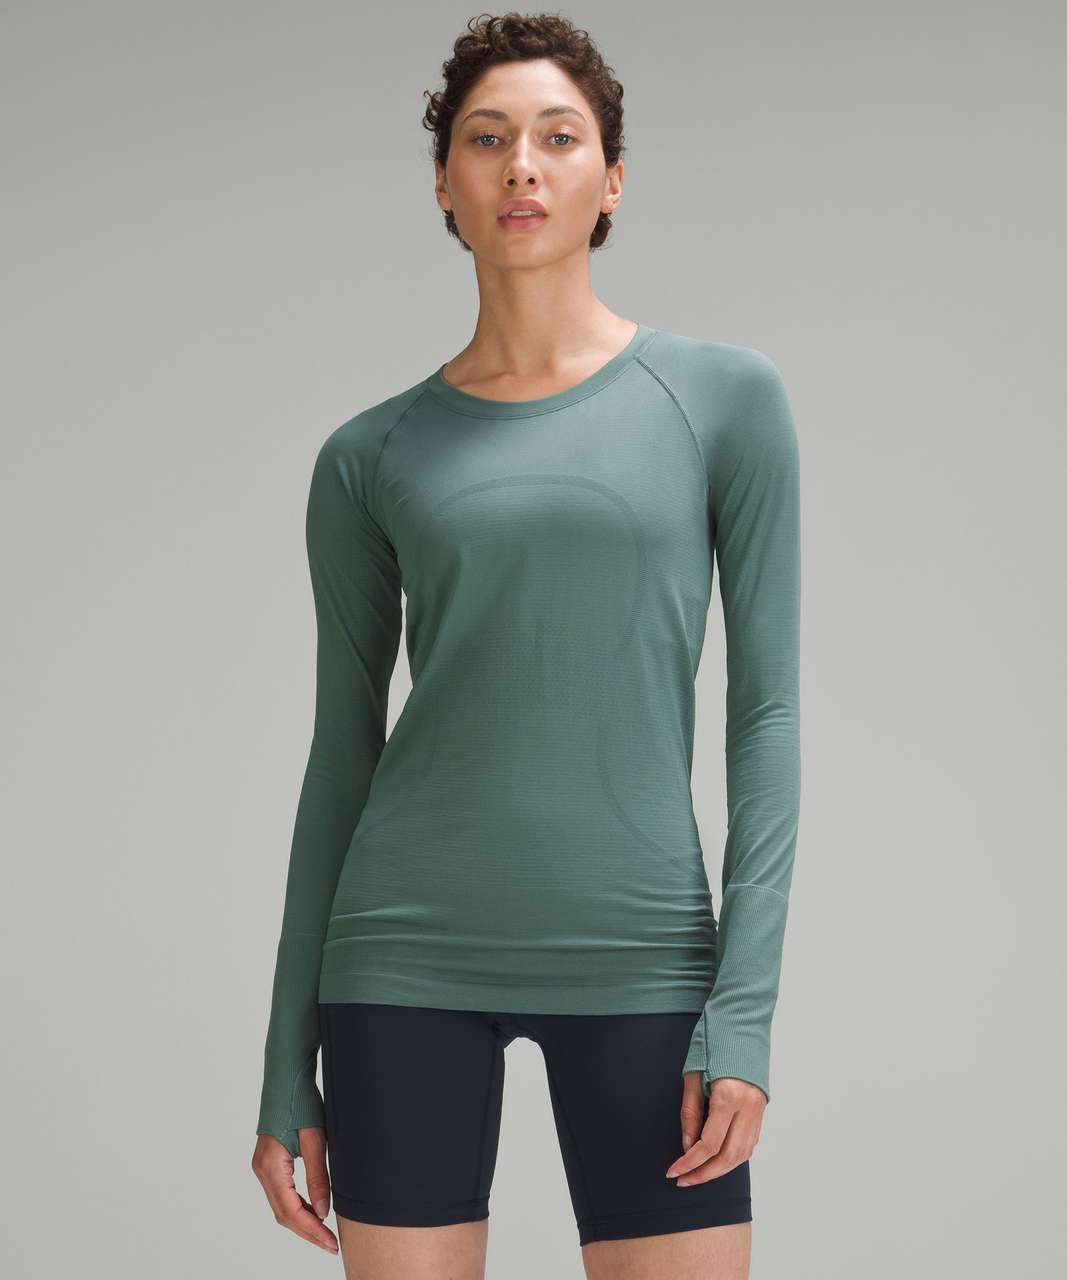 Lululemon Swiftly Tech Long-Sleeve Shirt 2.0 - Medium Forest / Medium Forest